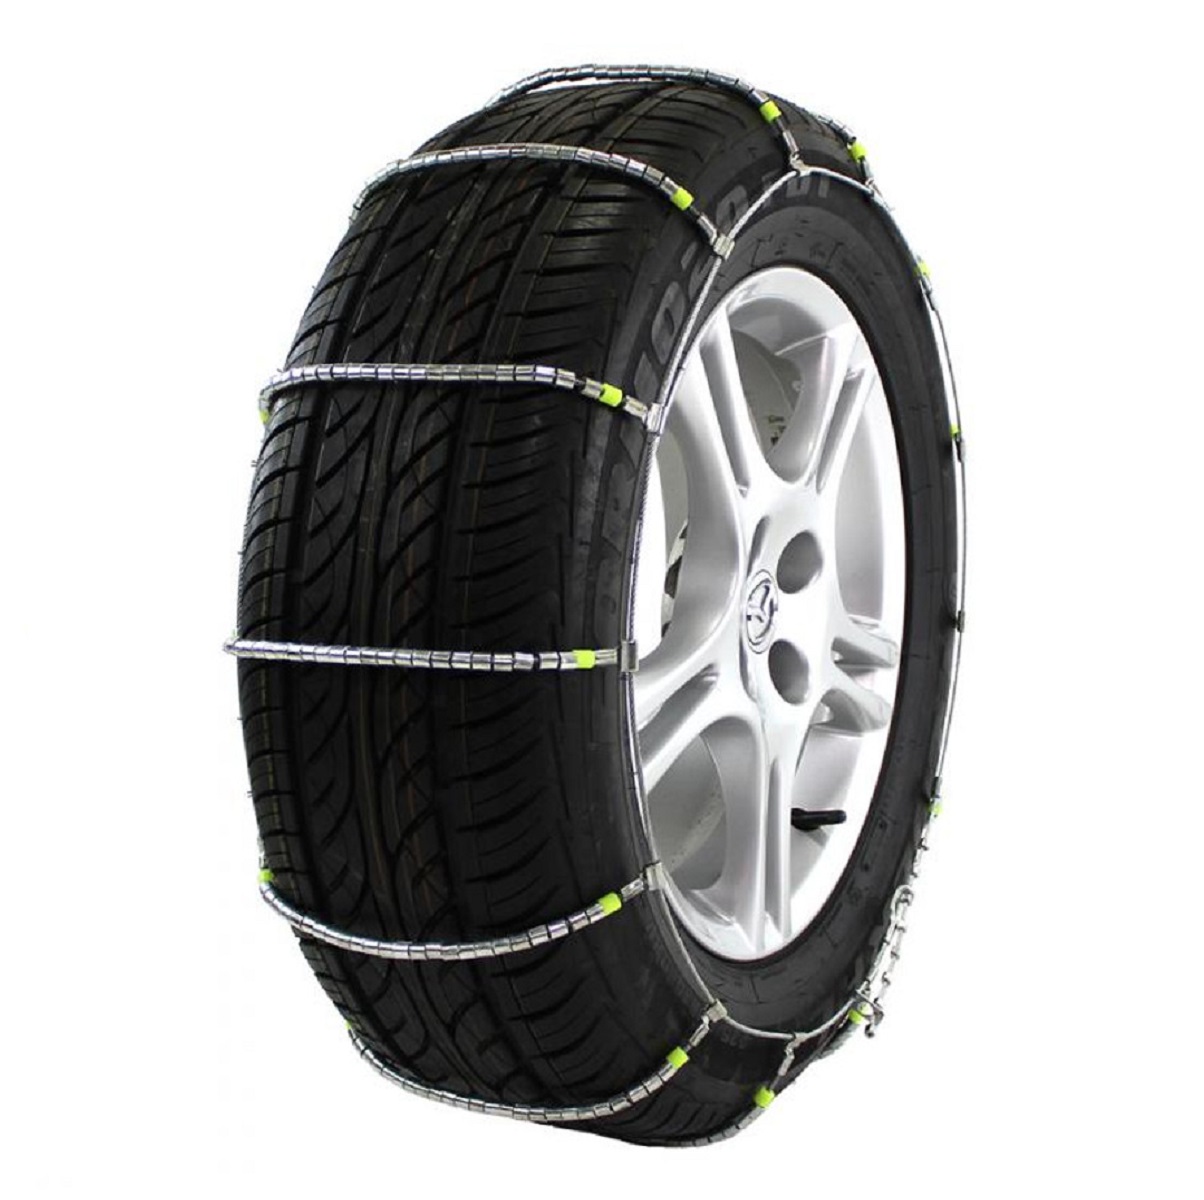 Volt V-Cable Car Tire Chains | Tire Chains 'R' Us